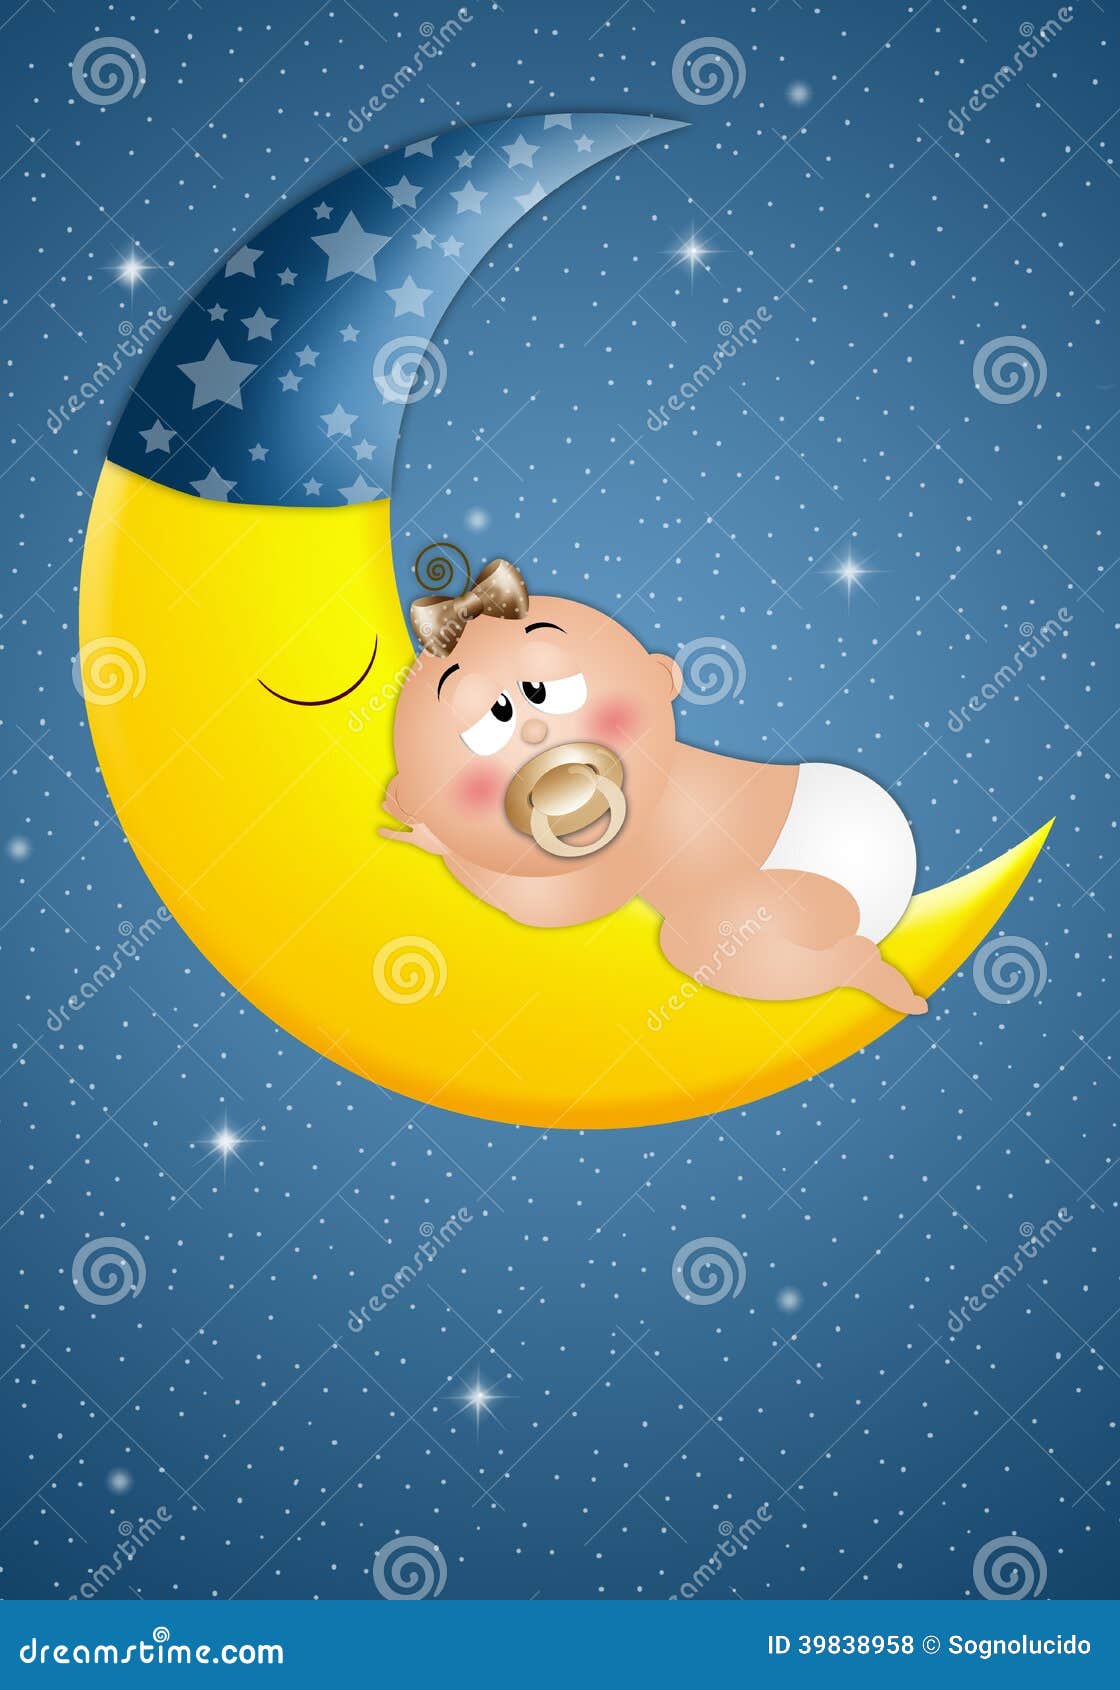 Sleeping Baby on the Moon in the Moonlight Stock Illustration ...